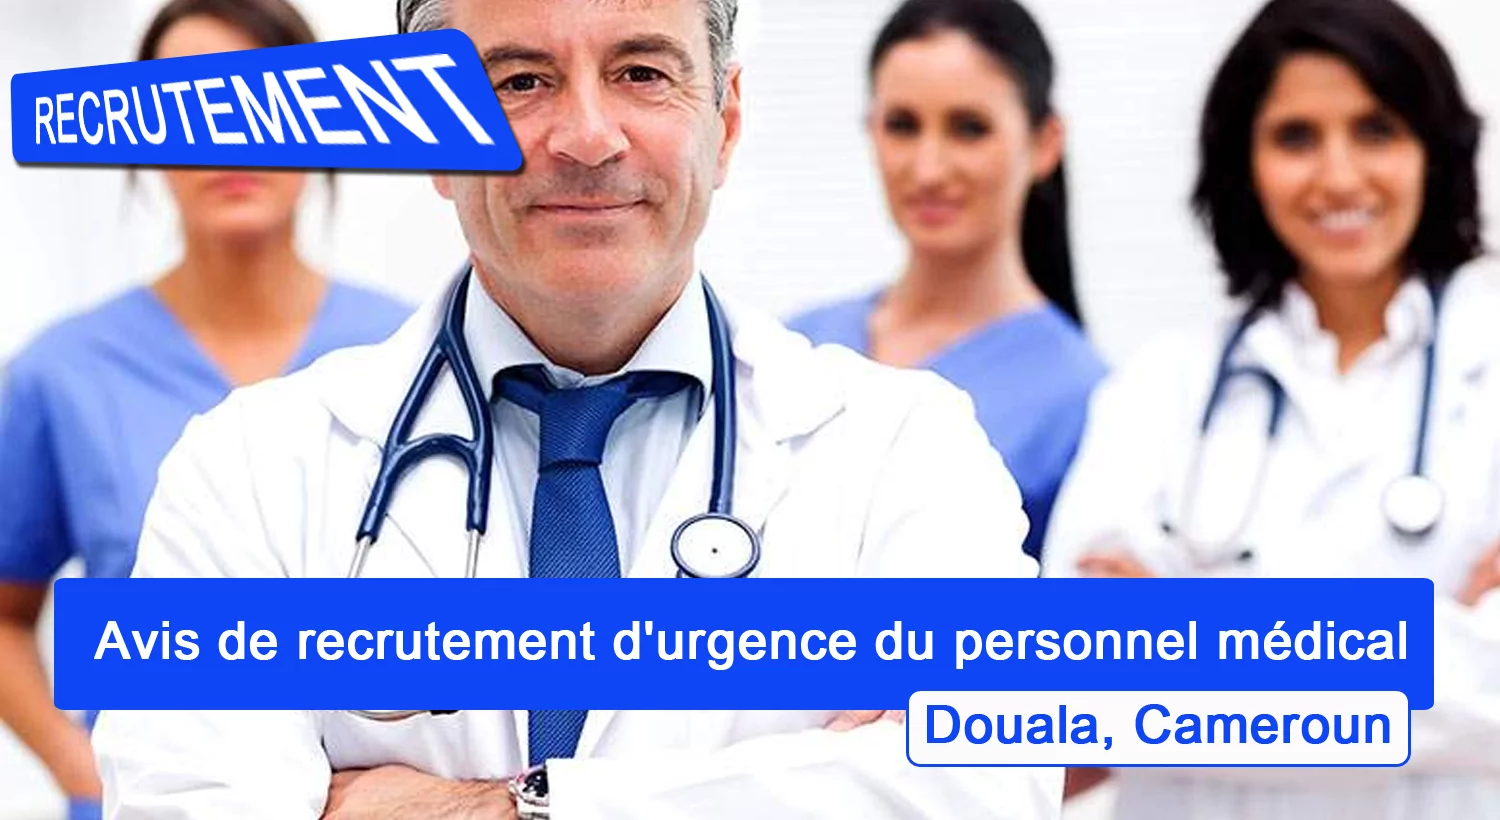 Avis de recrutement d’urgence du personnel médical, Douala Cameroun